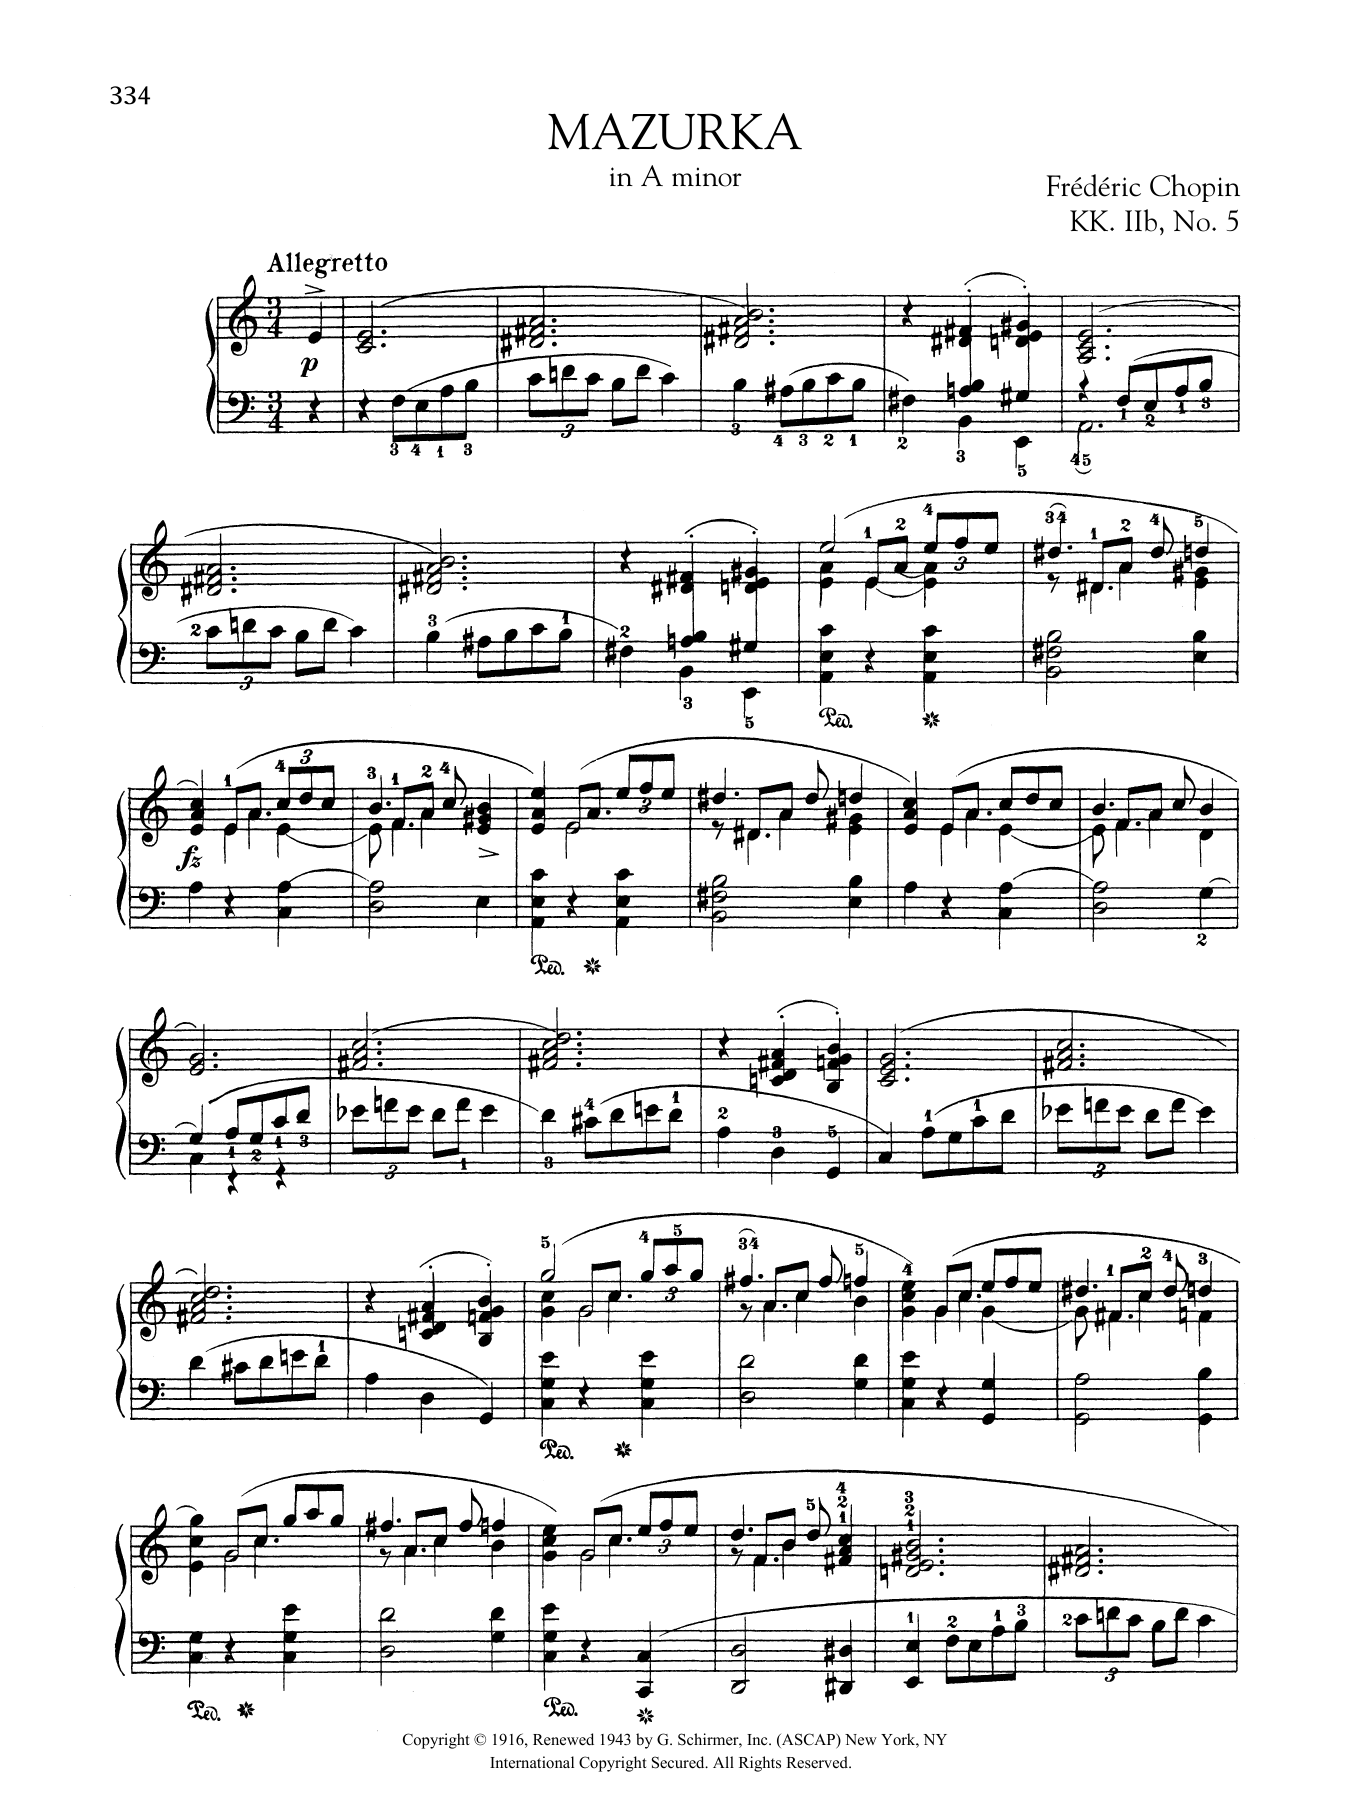 Download Frederic Chopin Mazurka in A minor, KK. IIb, No. 5 Sheet Music